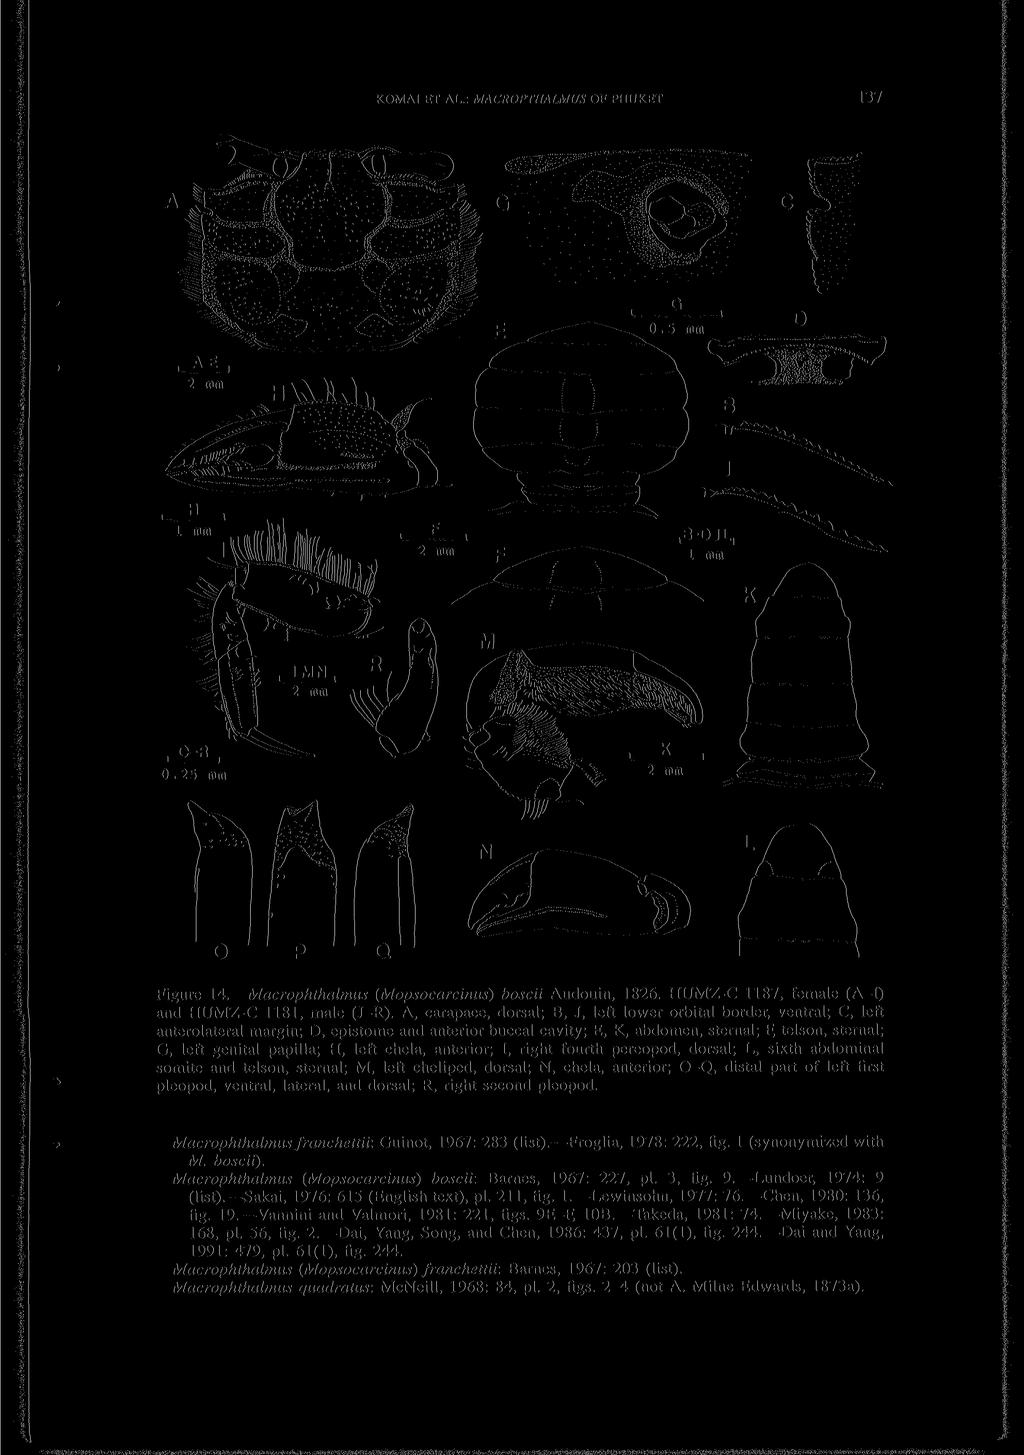 KOMAI ET AL.: MACROPTHALMUS OF PHUKET 137 Figure 14. Macrophthalmus (Mopsocarcinus) boscii Audouin, 1826. HUMZ-C 1187, female (A-I) and HUMZ-C 1181, male (J-R).